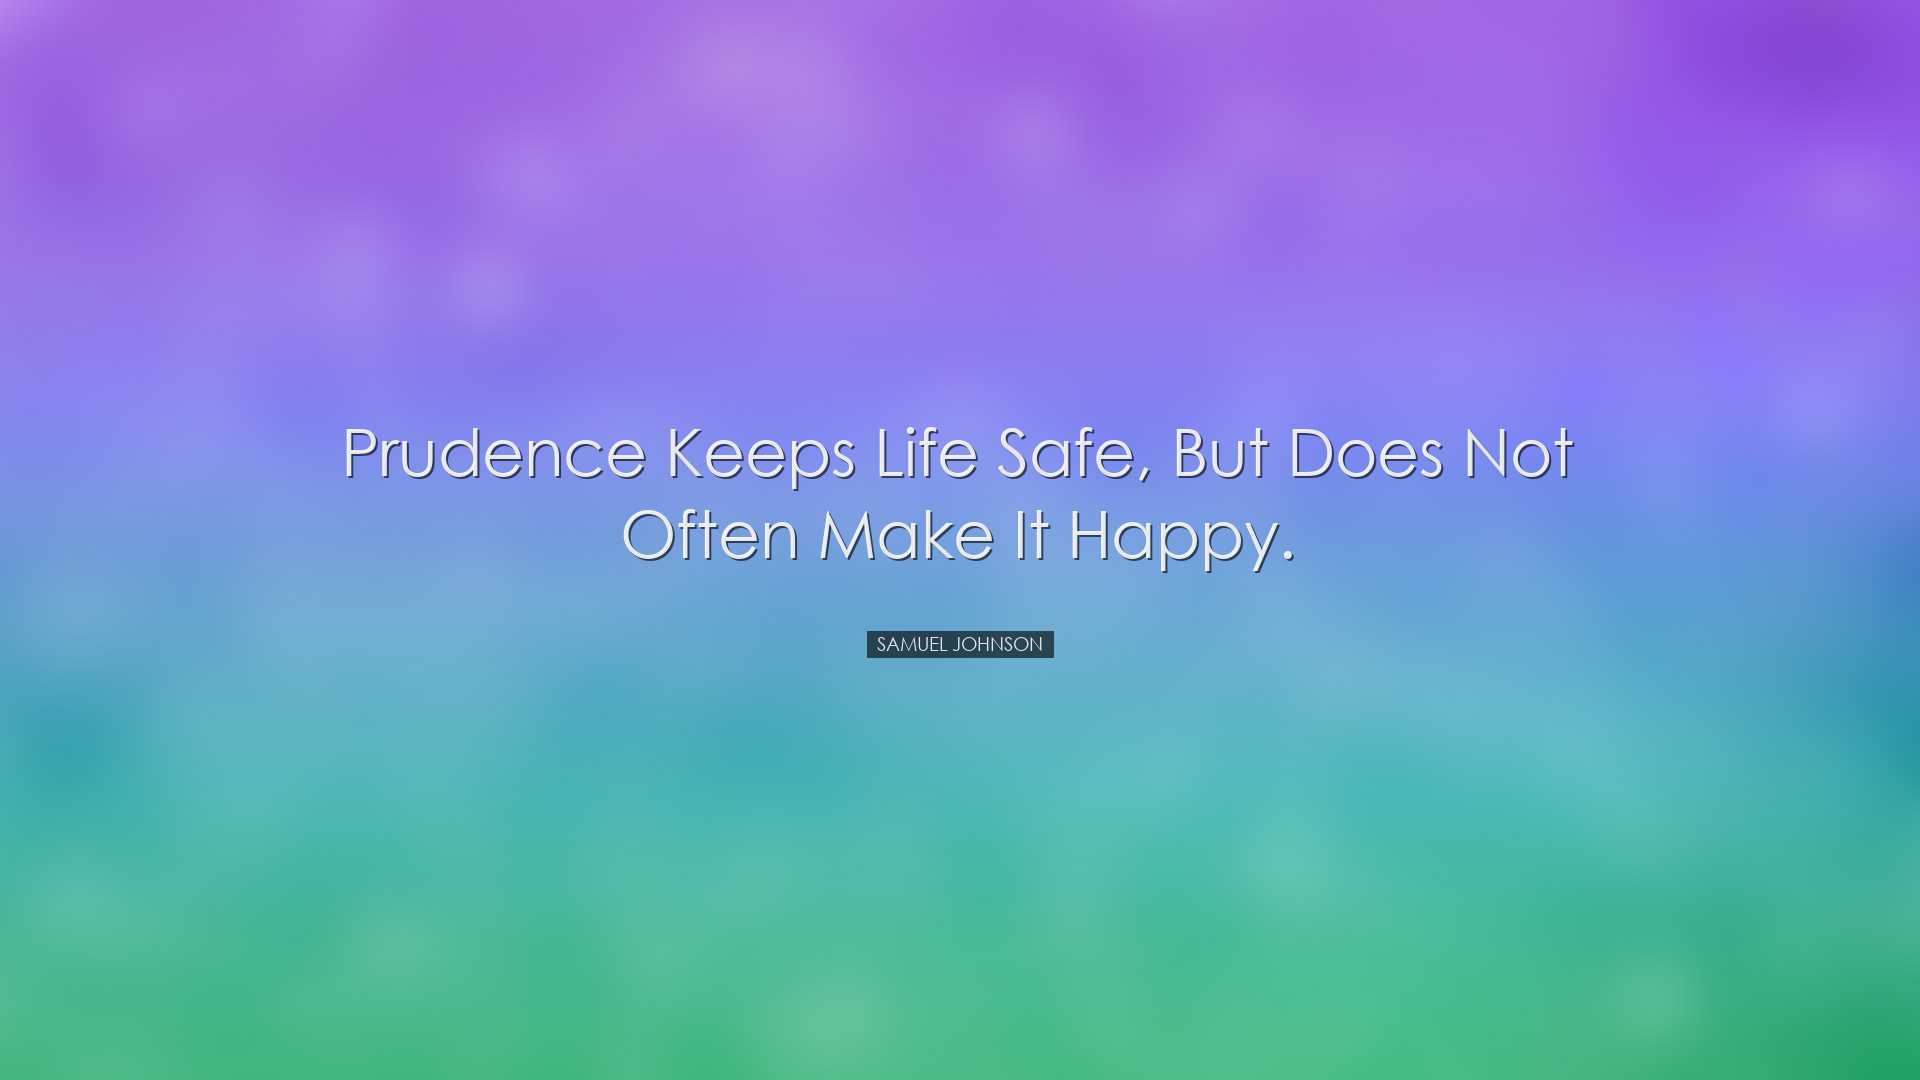 Prudence keeps life safe, but does not often make it happy. - Samu